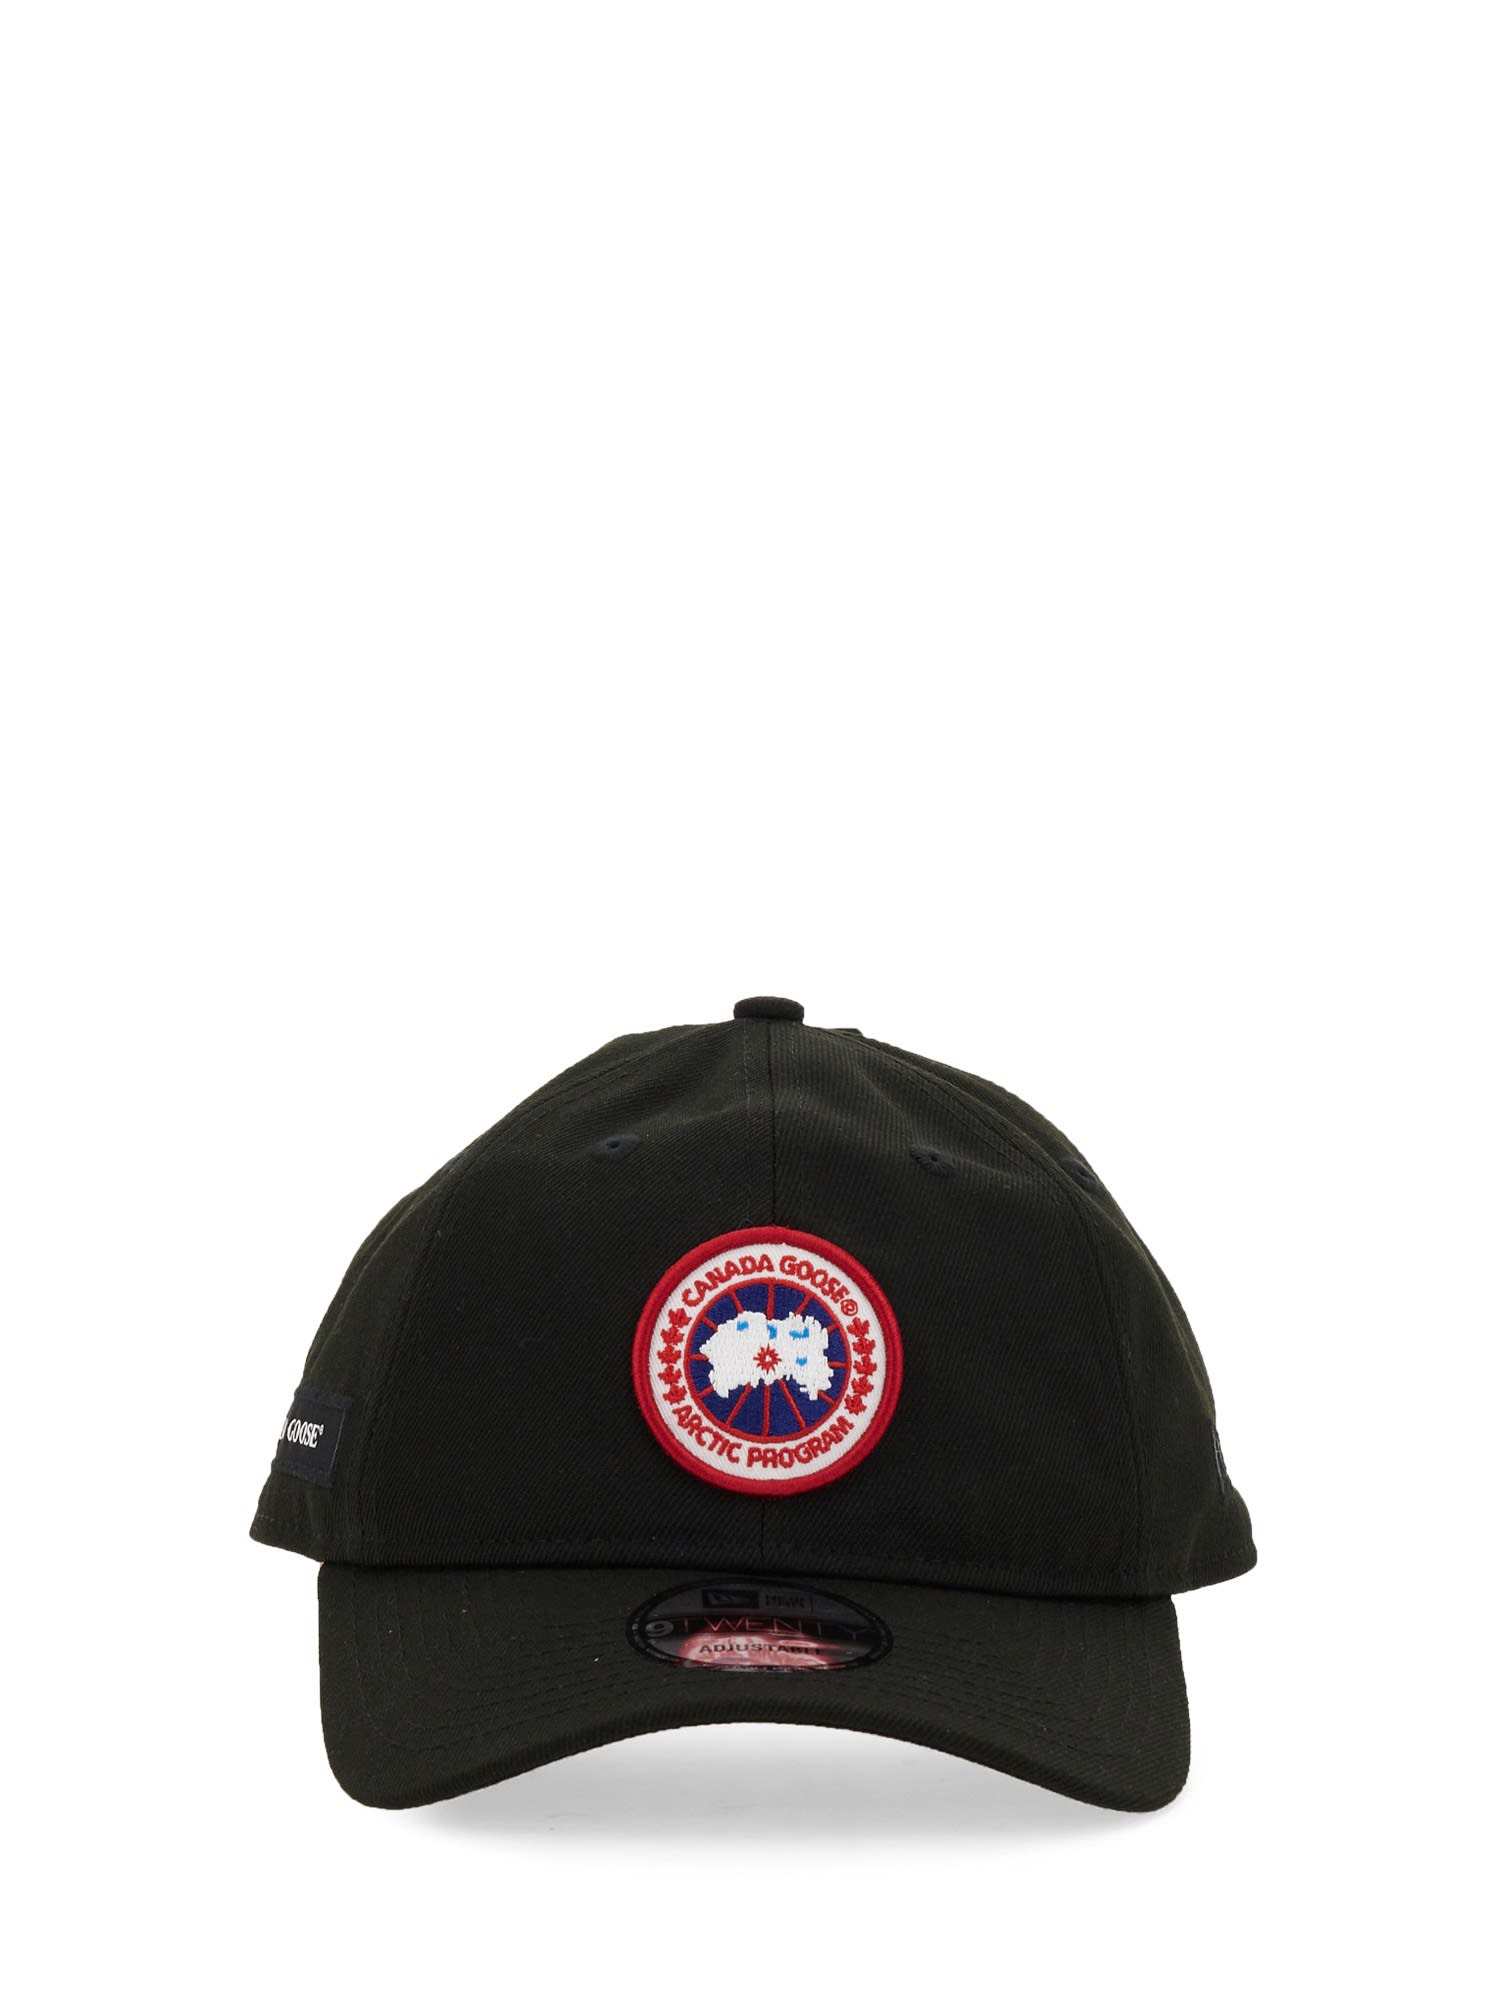 Canada Goose Baseball Cap